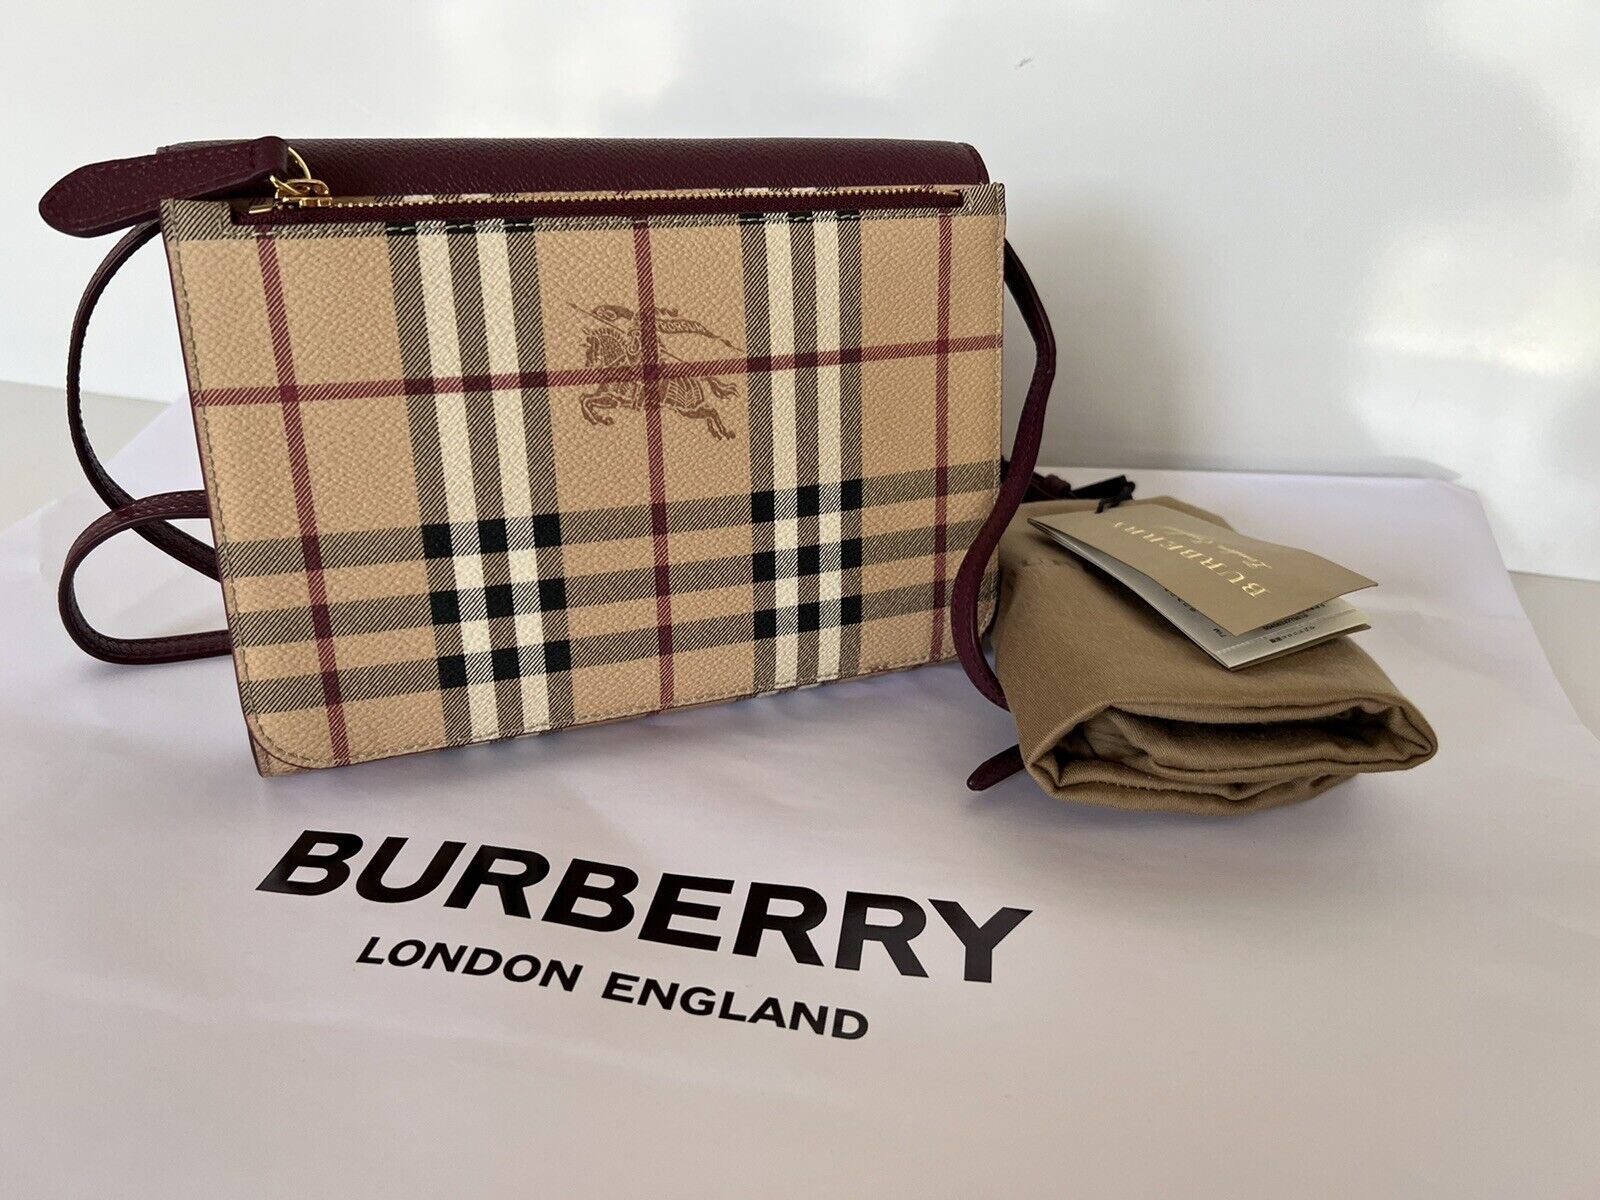 NWT Burberry London Small Loxley Haymarket Check Dark Plum Crossbody Bag 8037917